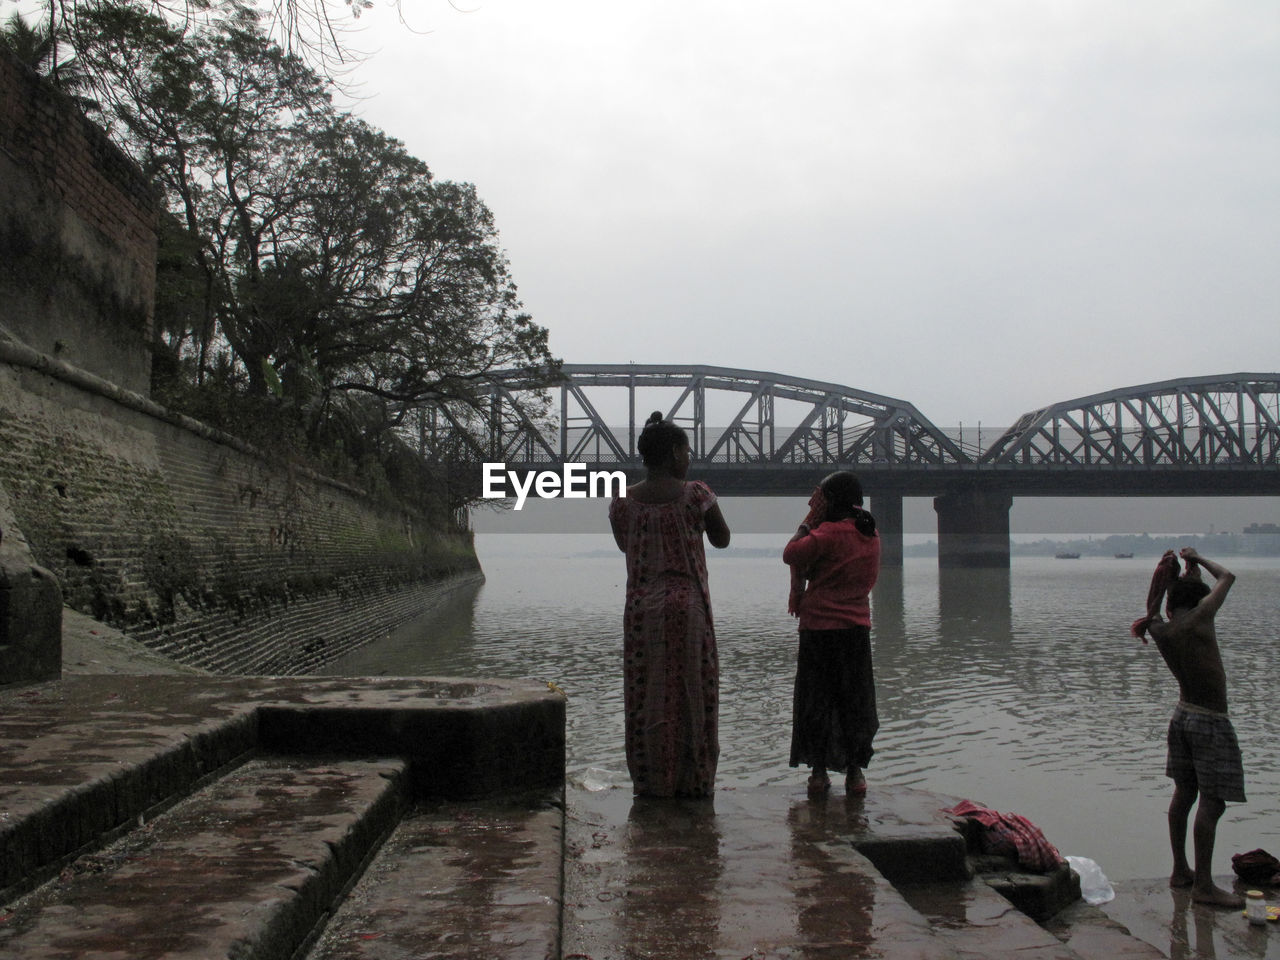 Women standing on steps by river against ganga railroad bridge